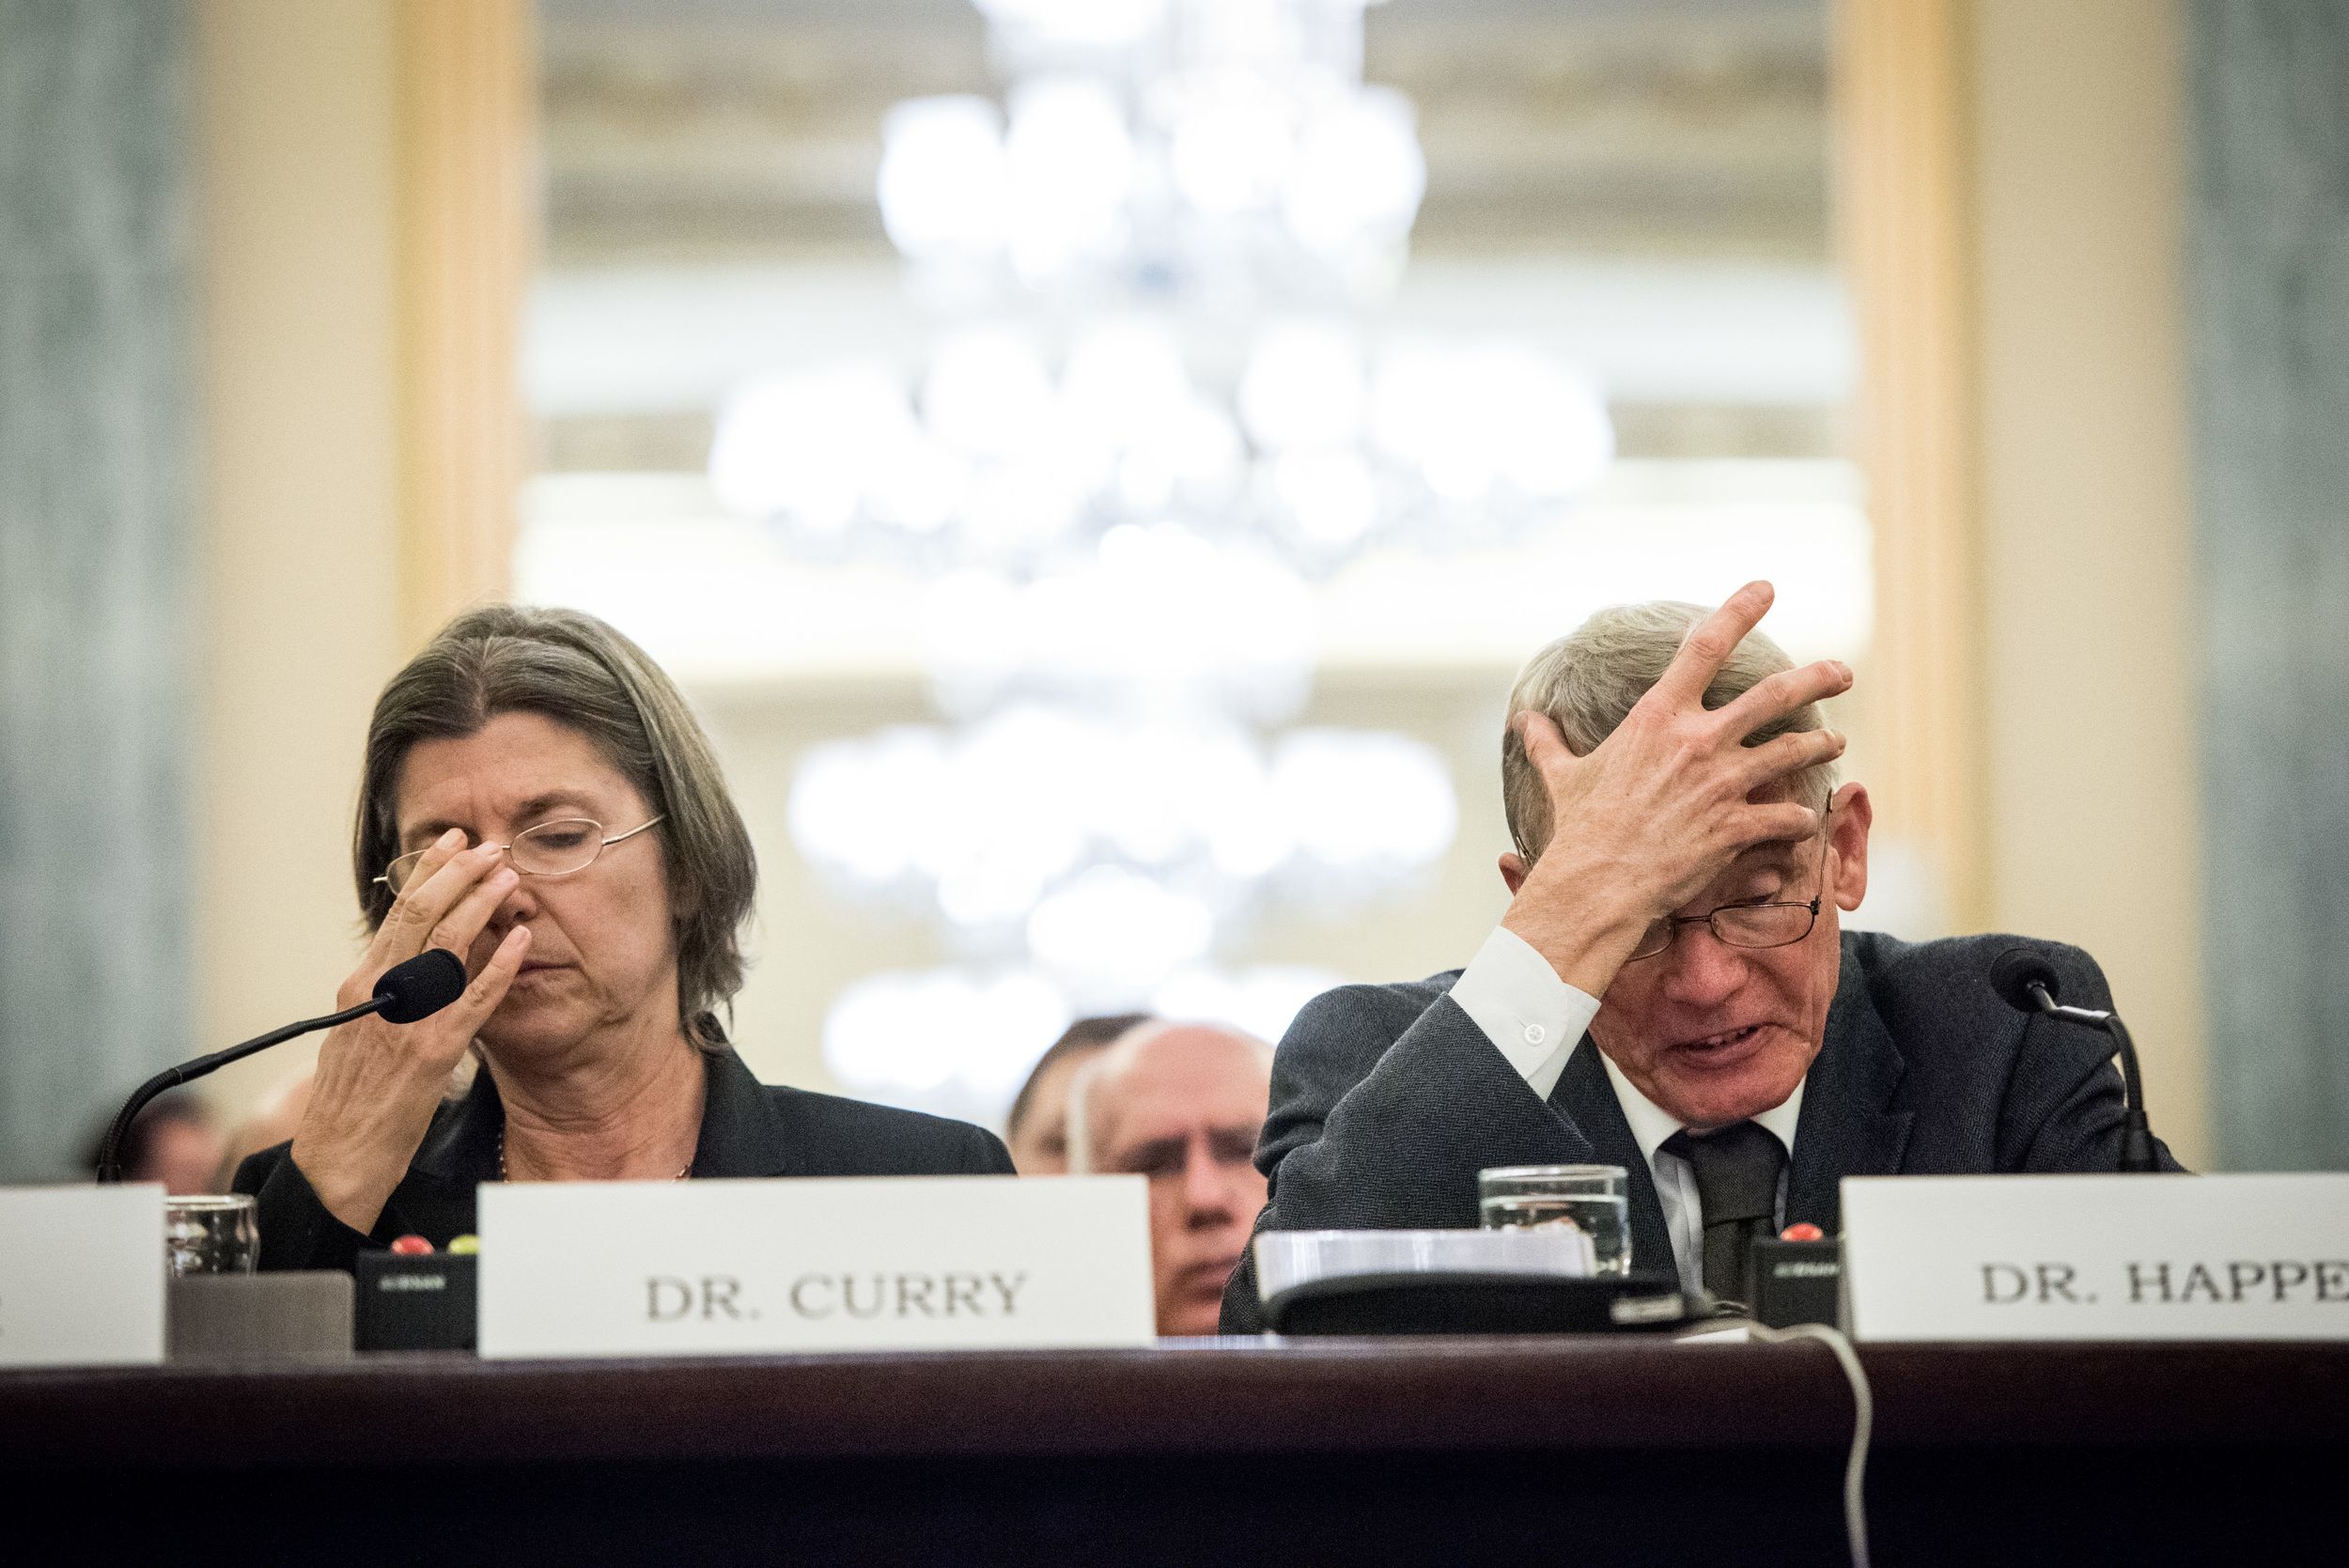 Senate Climate Skeptic Hearing in Washington D.C.